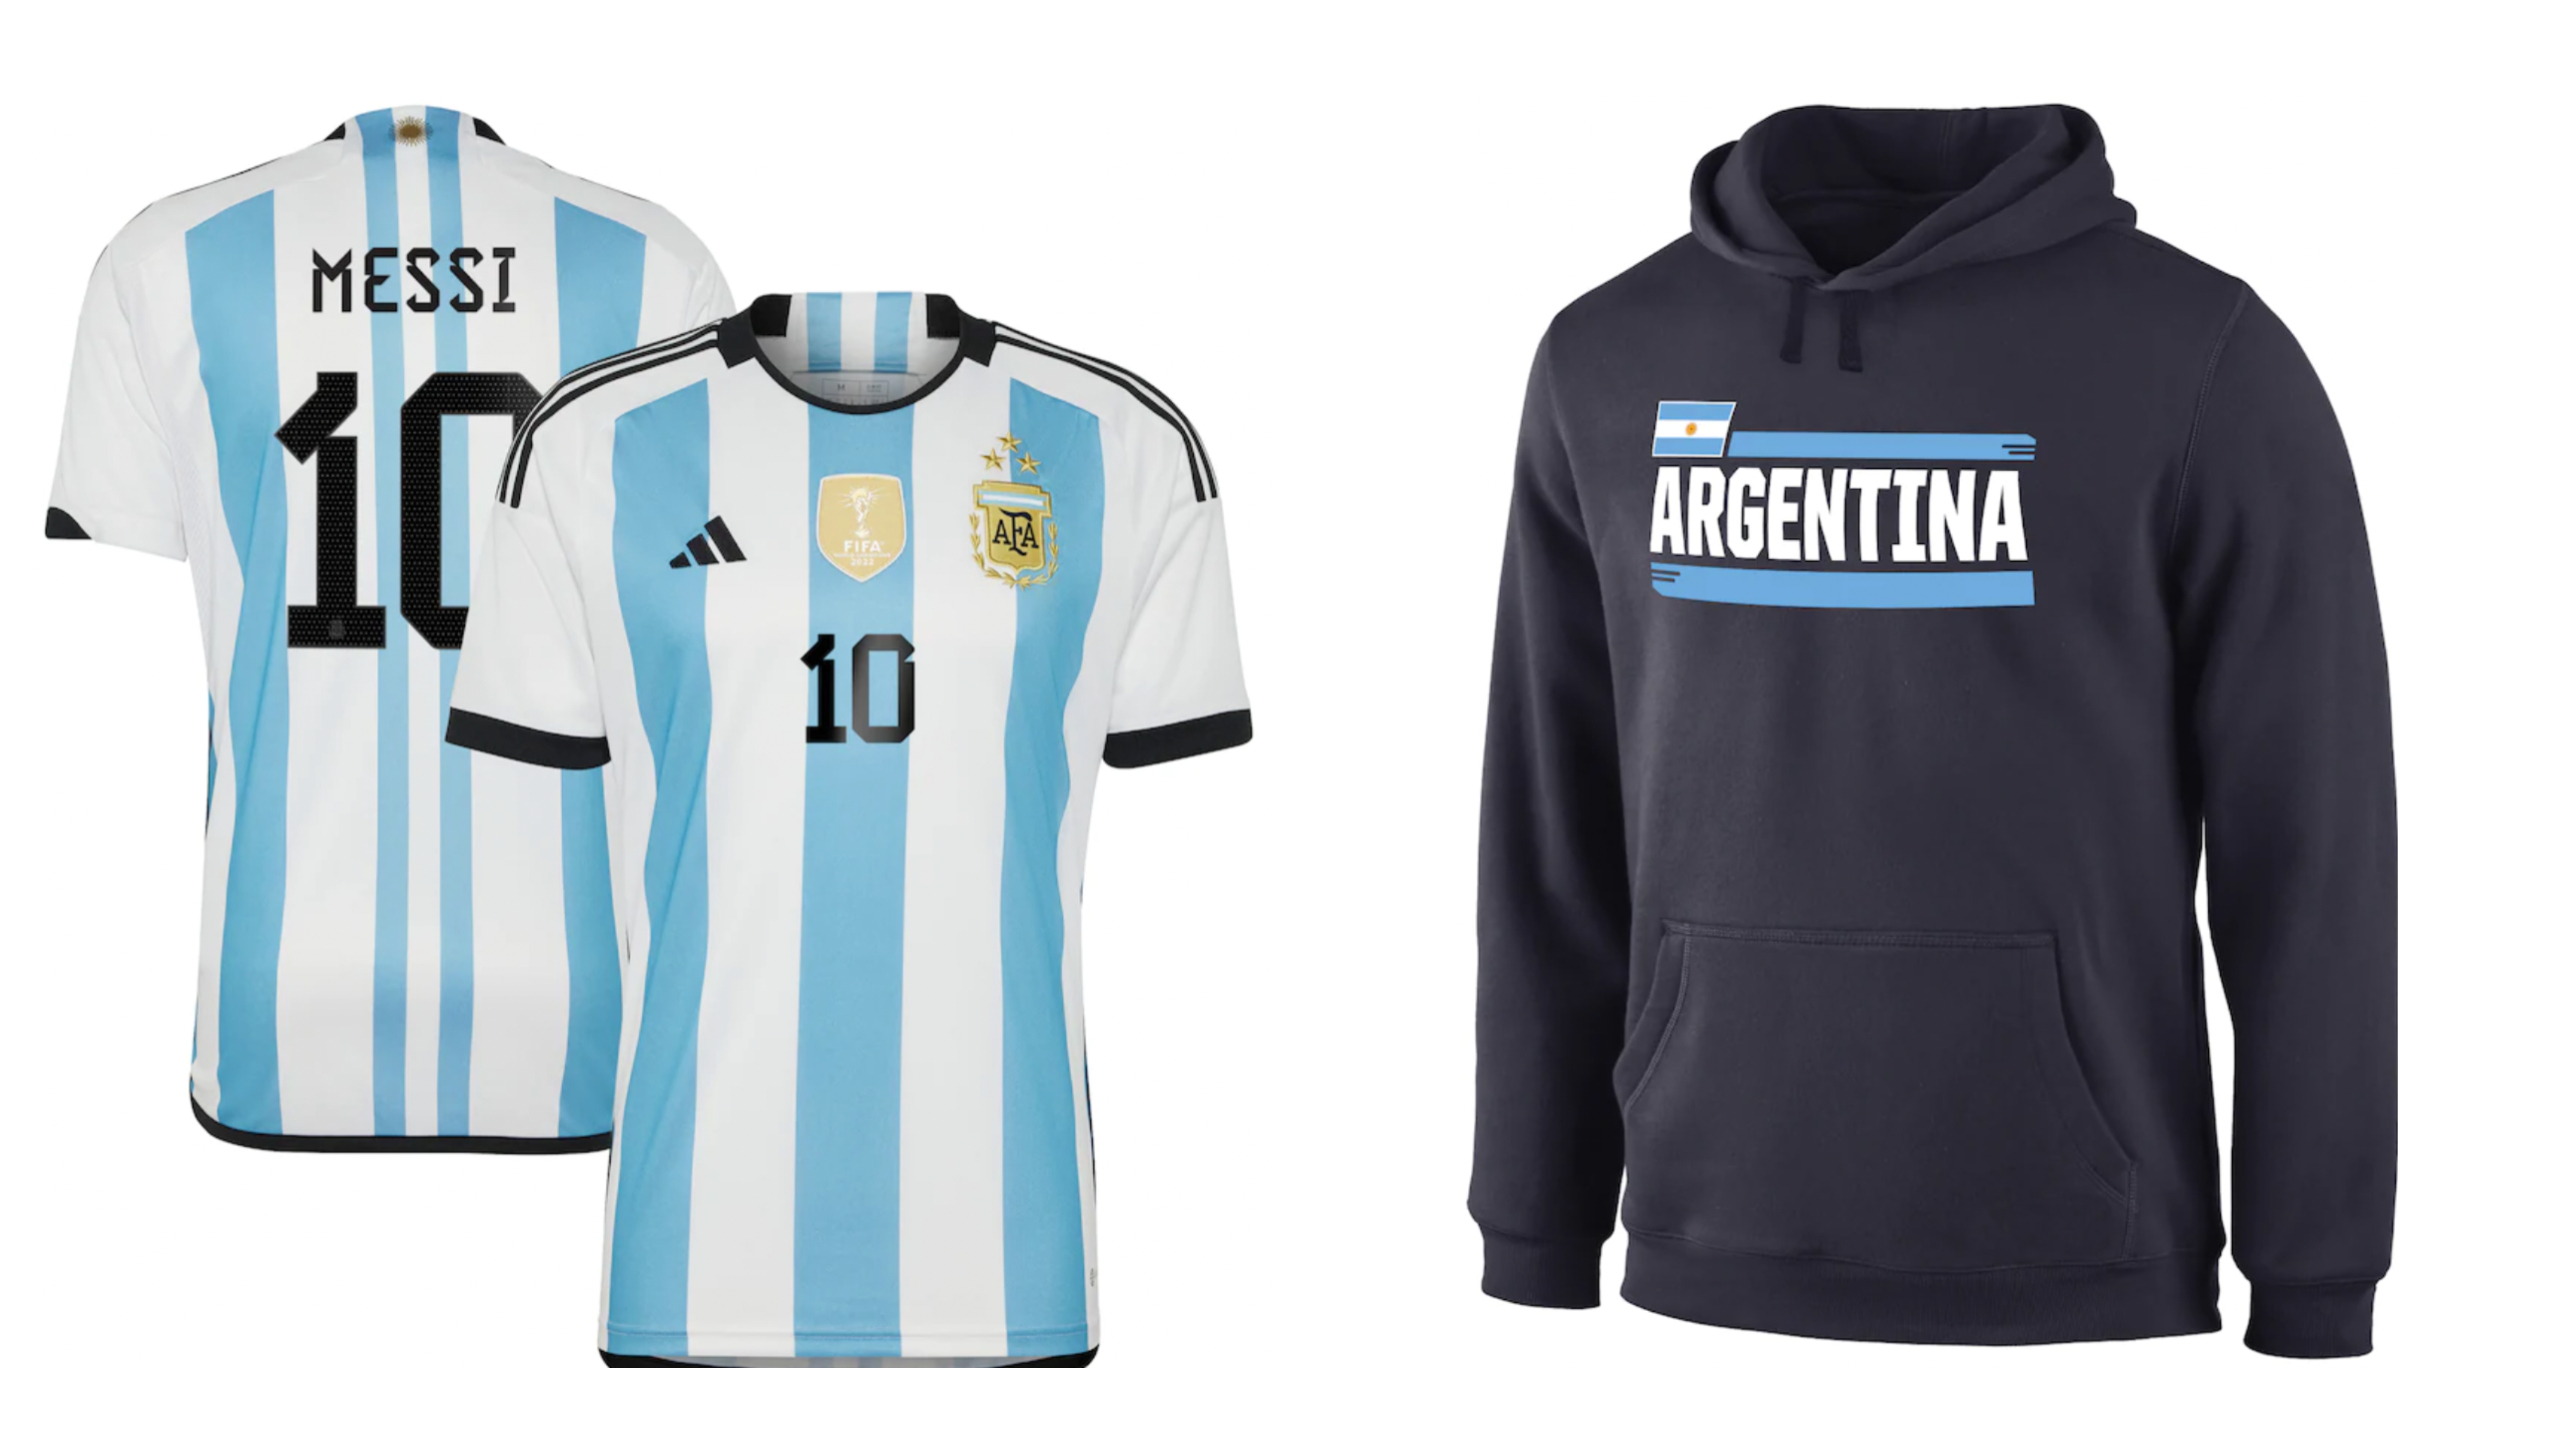 World Cup Argentina championship jerseys, shirts, gear kits